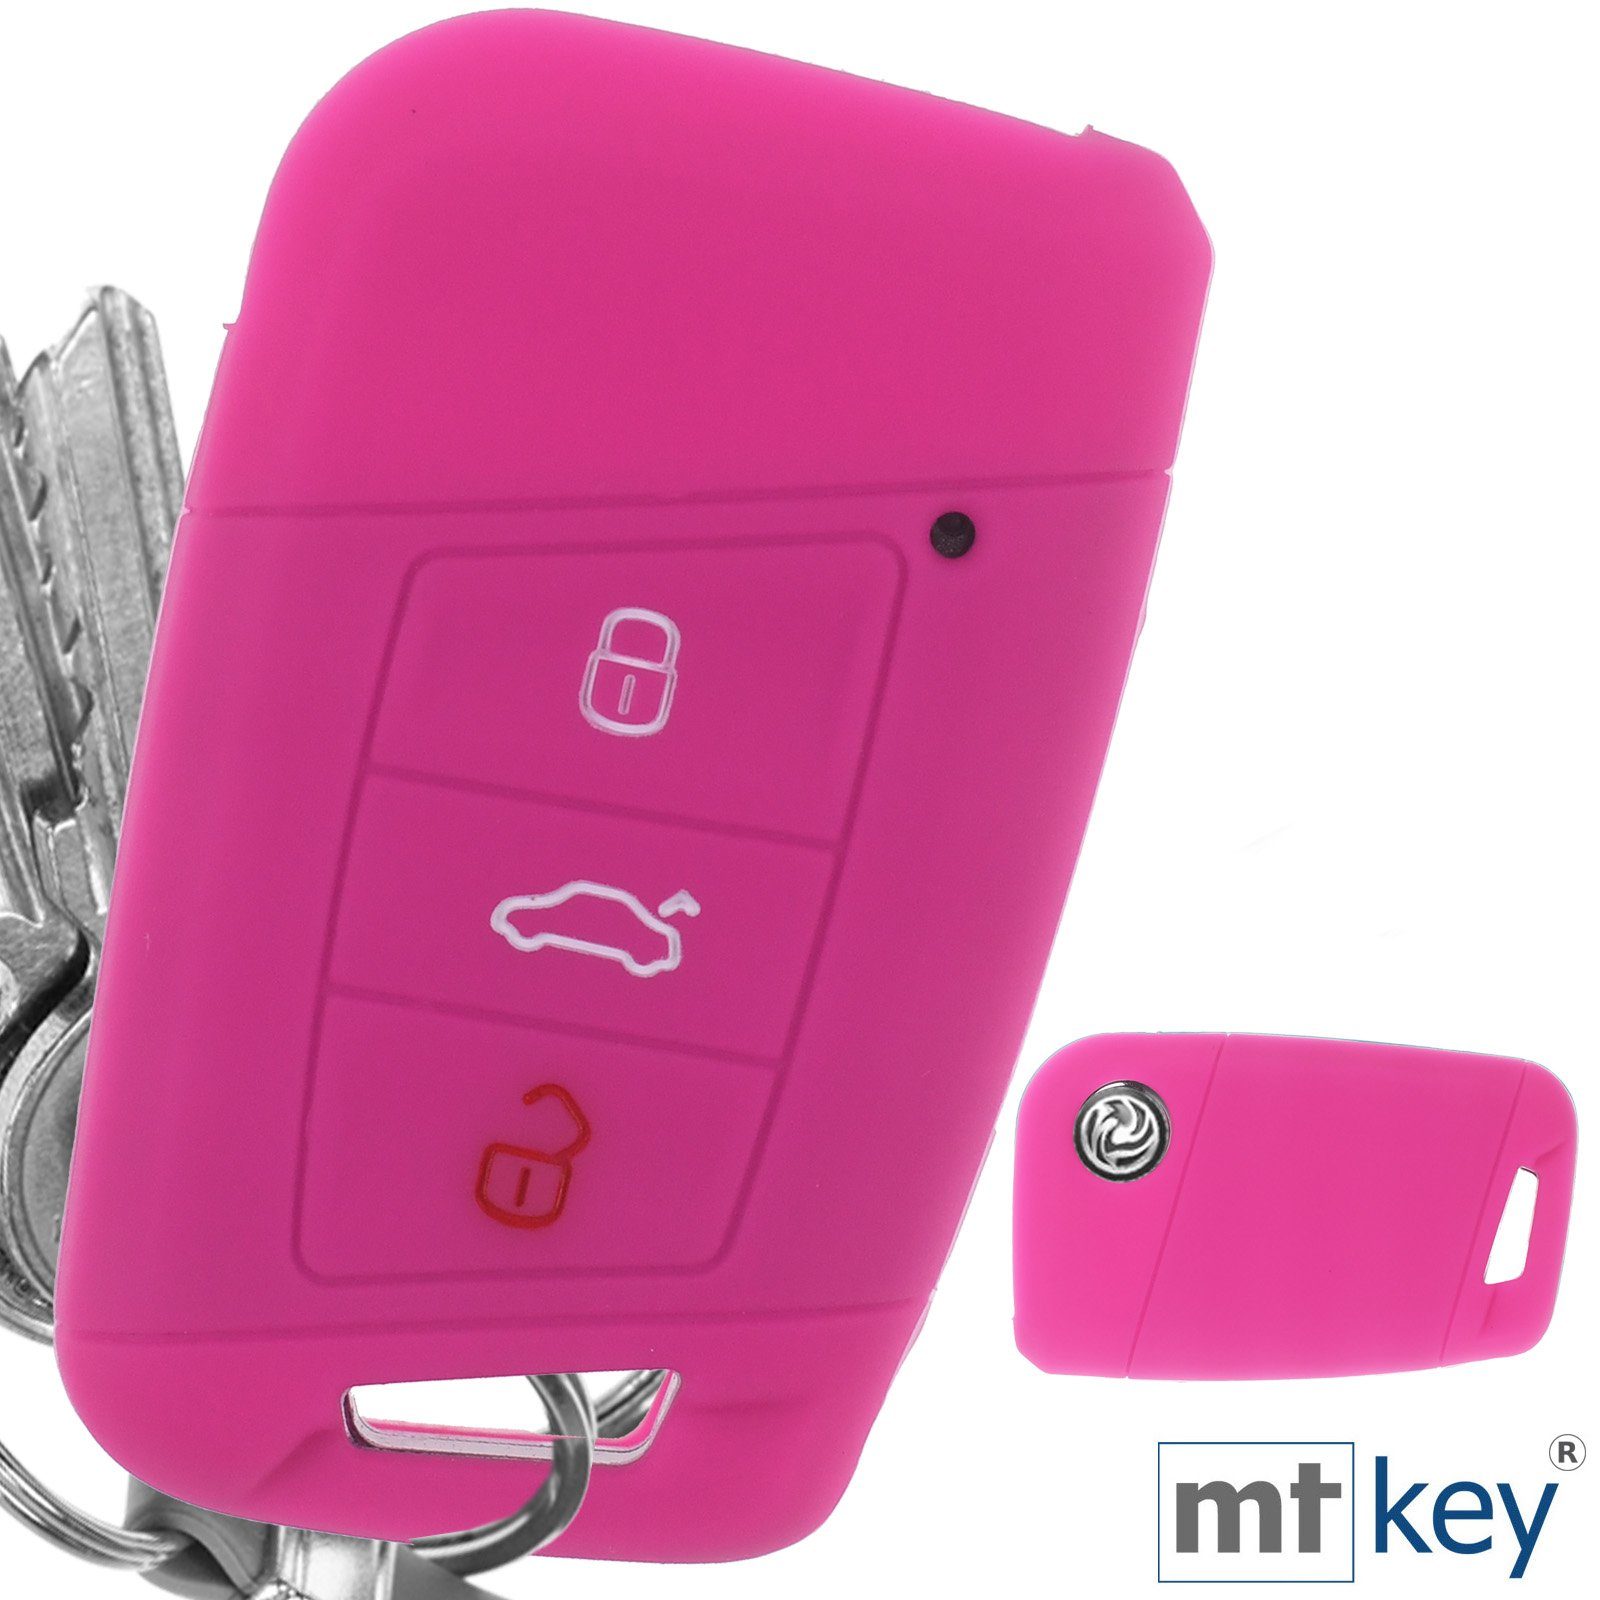 Pink, SMARTKEY für Schlüsseltasche B8 Passat Kodiaq mt-key KEYLESS Softcase 3 VW Tasten Arteon Autoschlüssel Skoda Schutzhülle Silikon